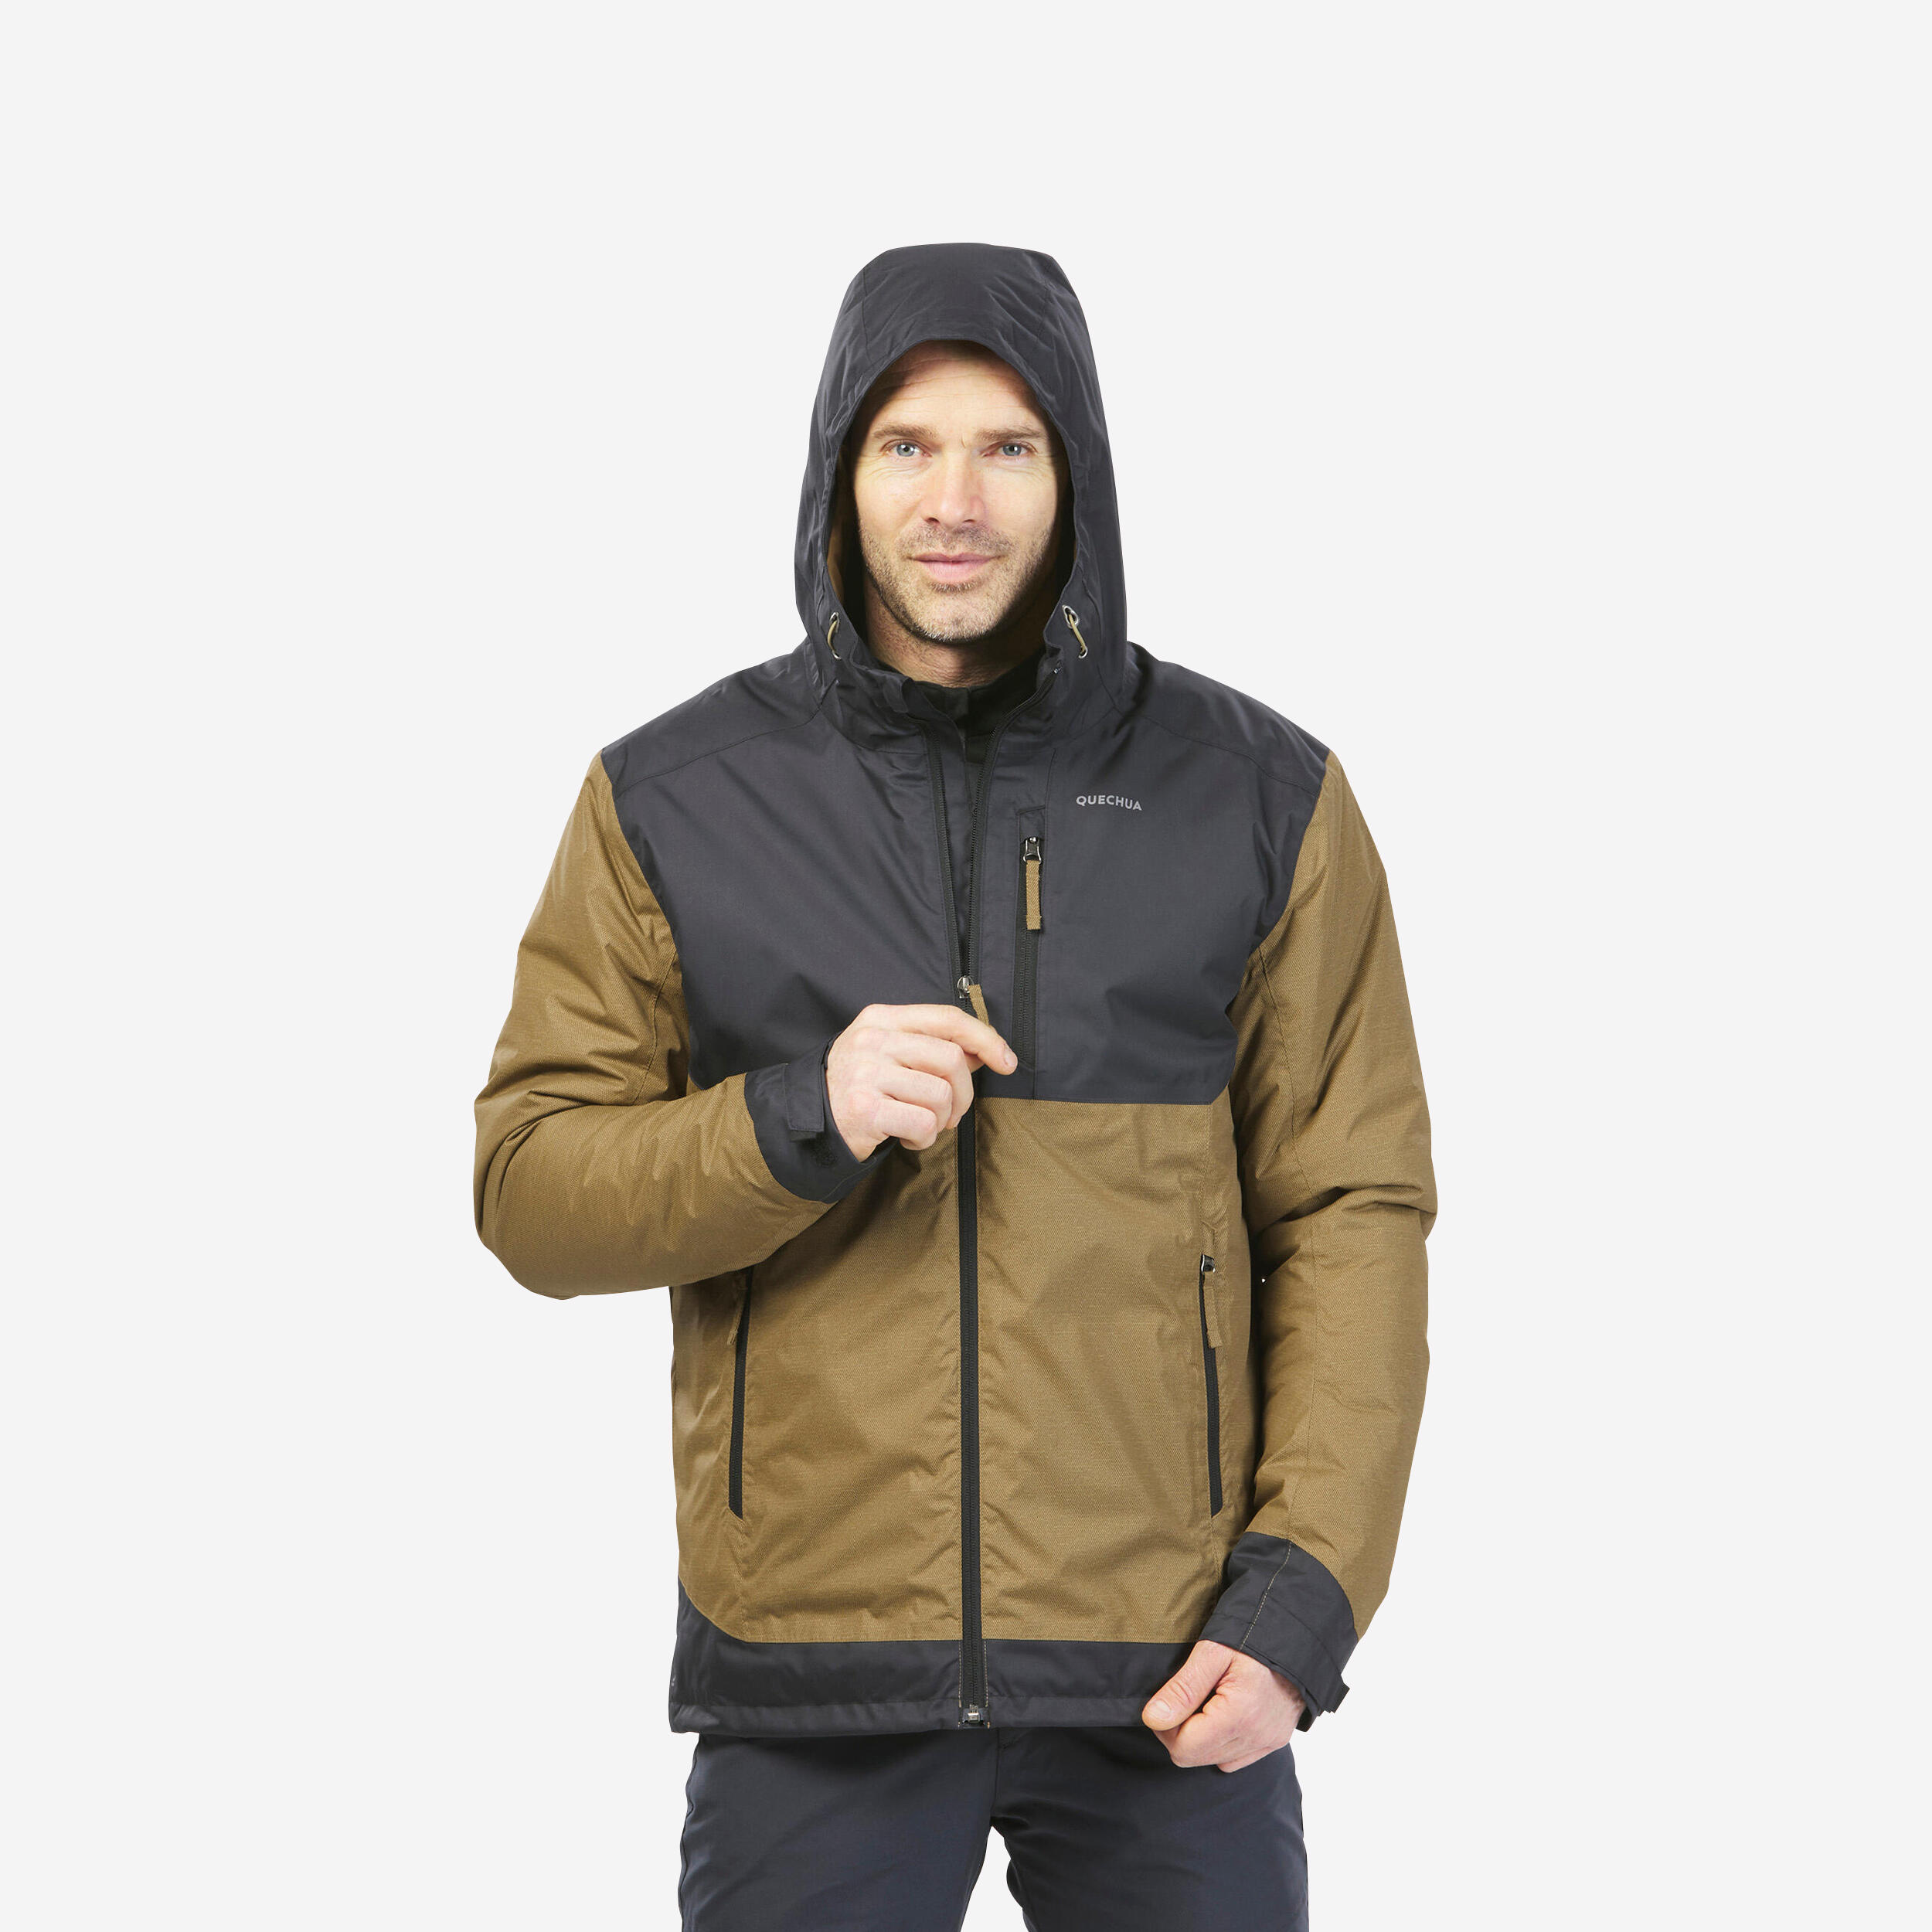 Men’s hiking waterproof winter jacket - SH500 -10°C 1/20